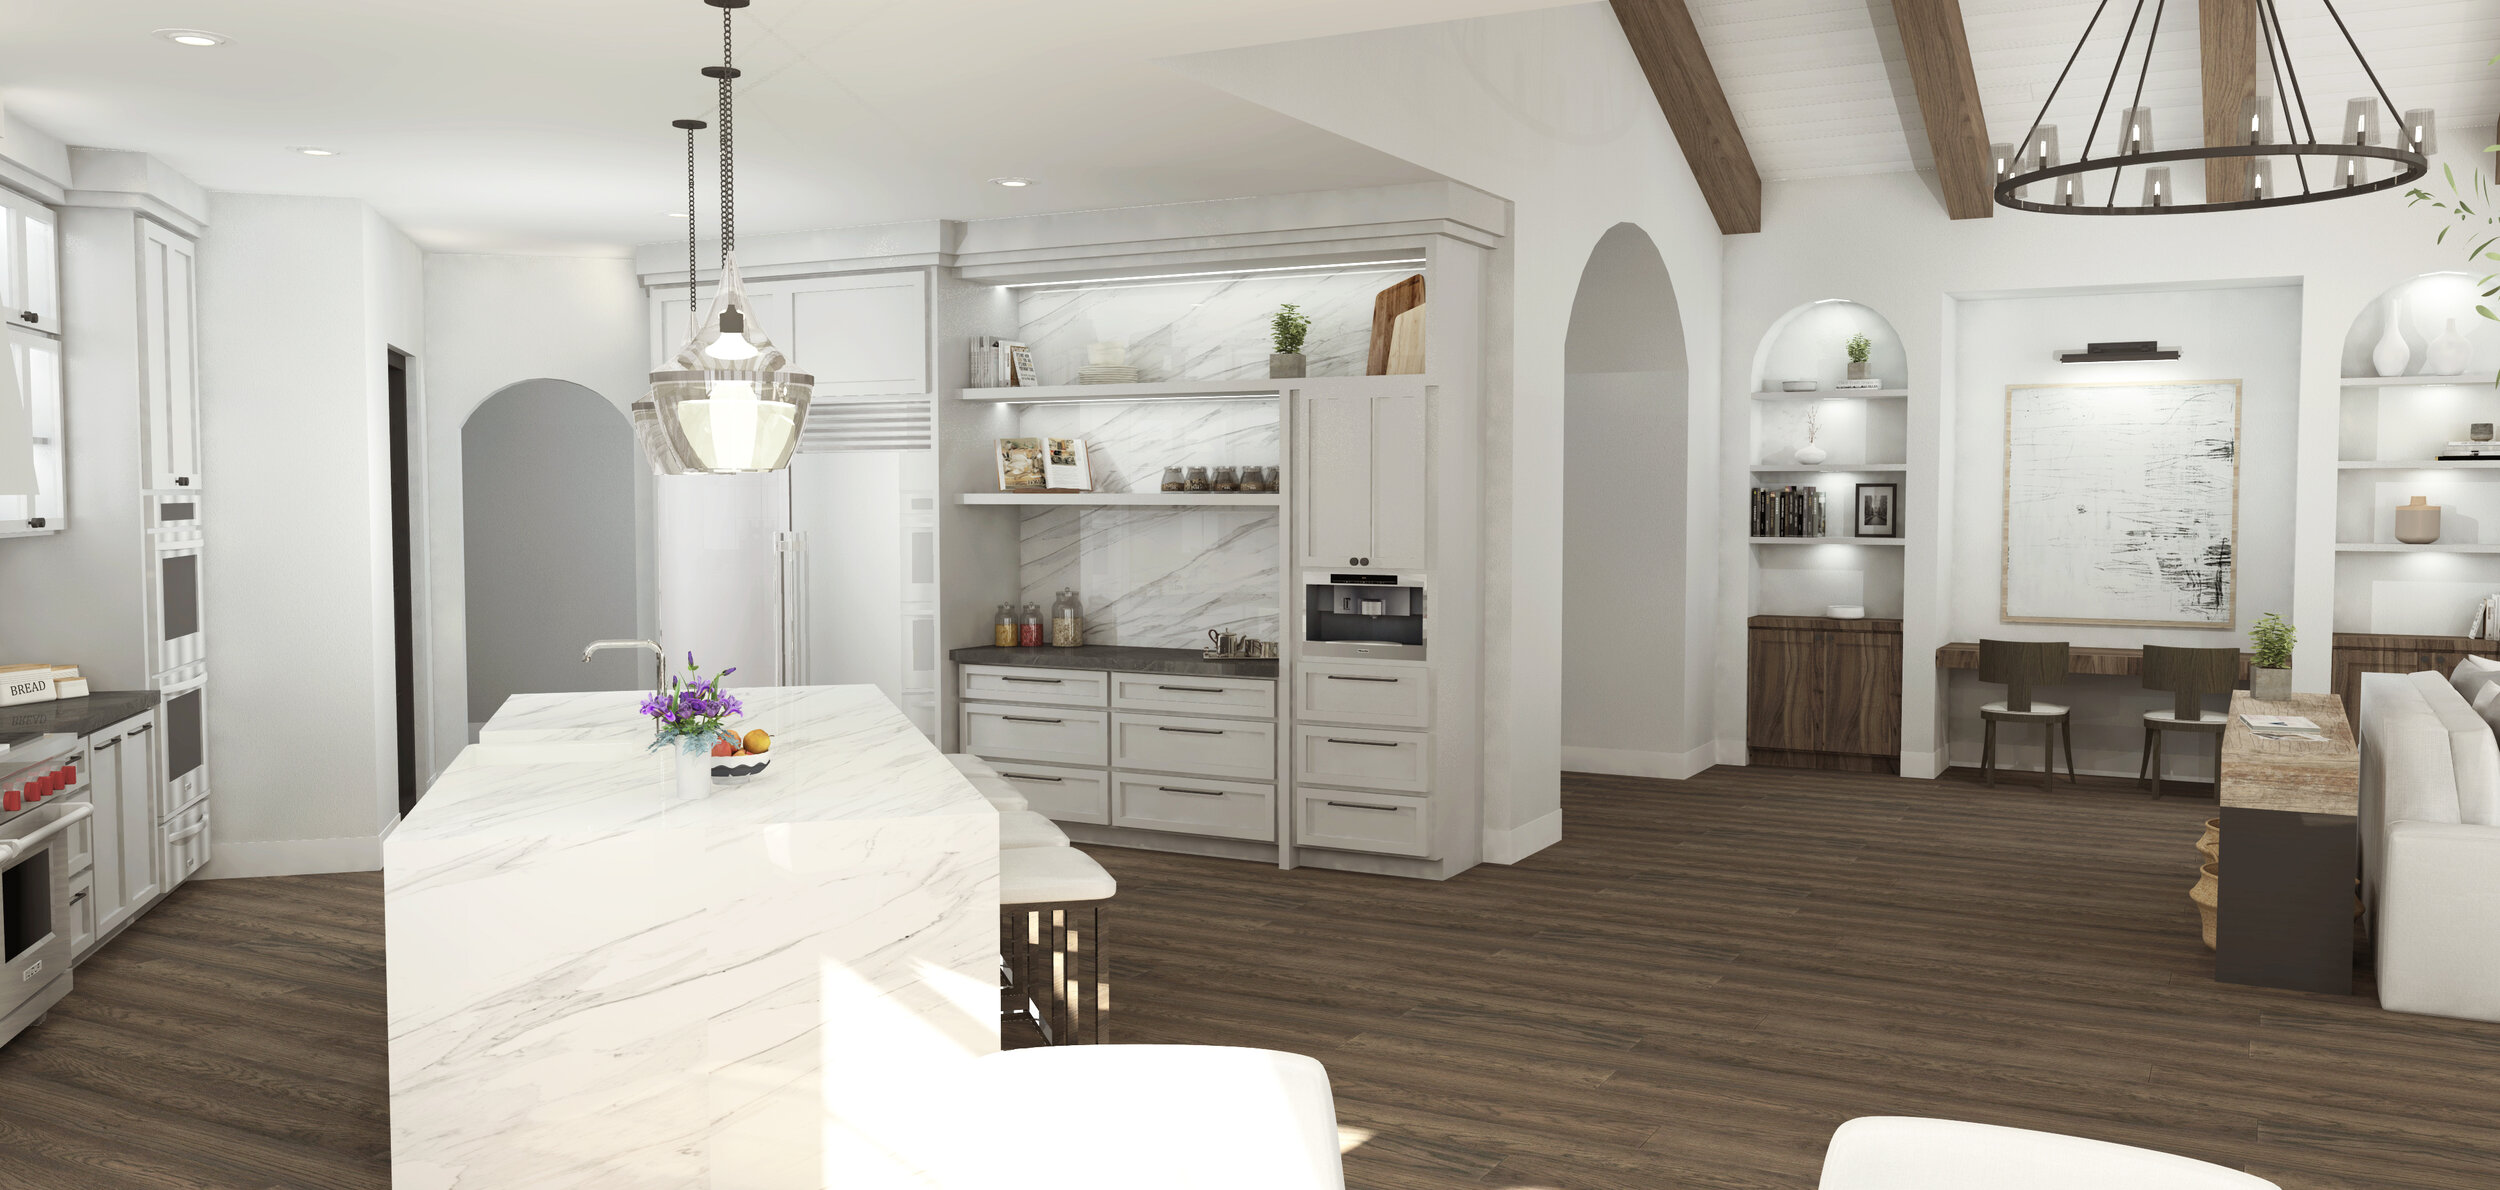 liz-tapper-interiors-kitchen-remodel-interior-design-rendering 3.jpg